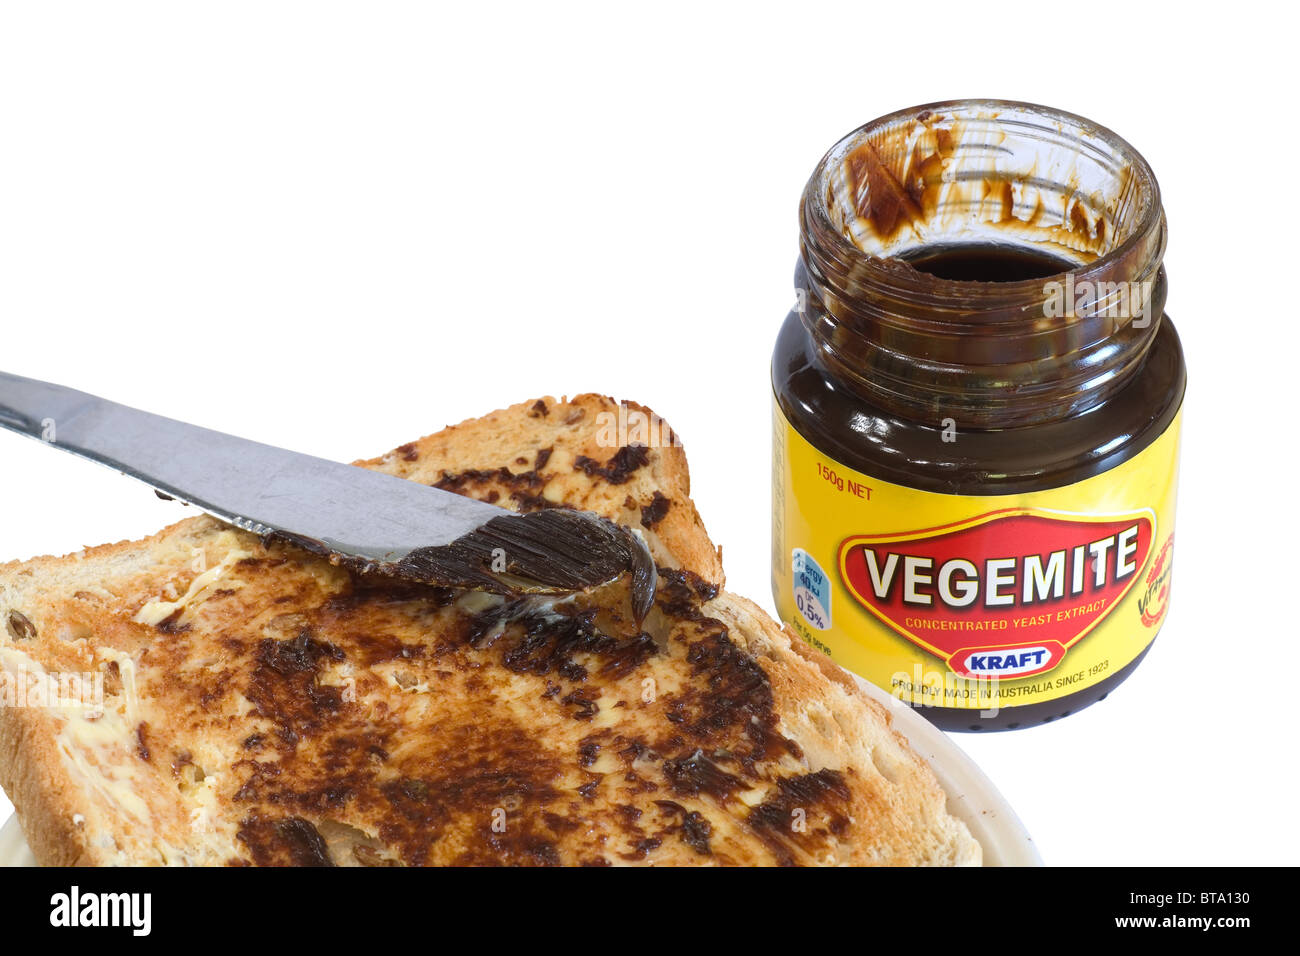 Vegemite Sandwich stock image. Image of knife, food, extract